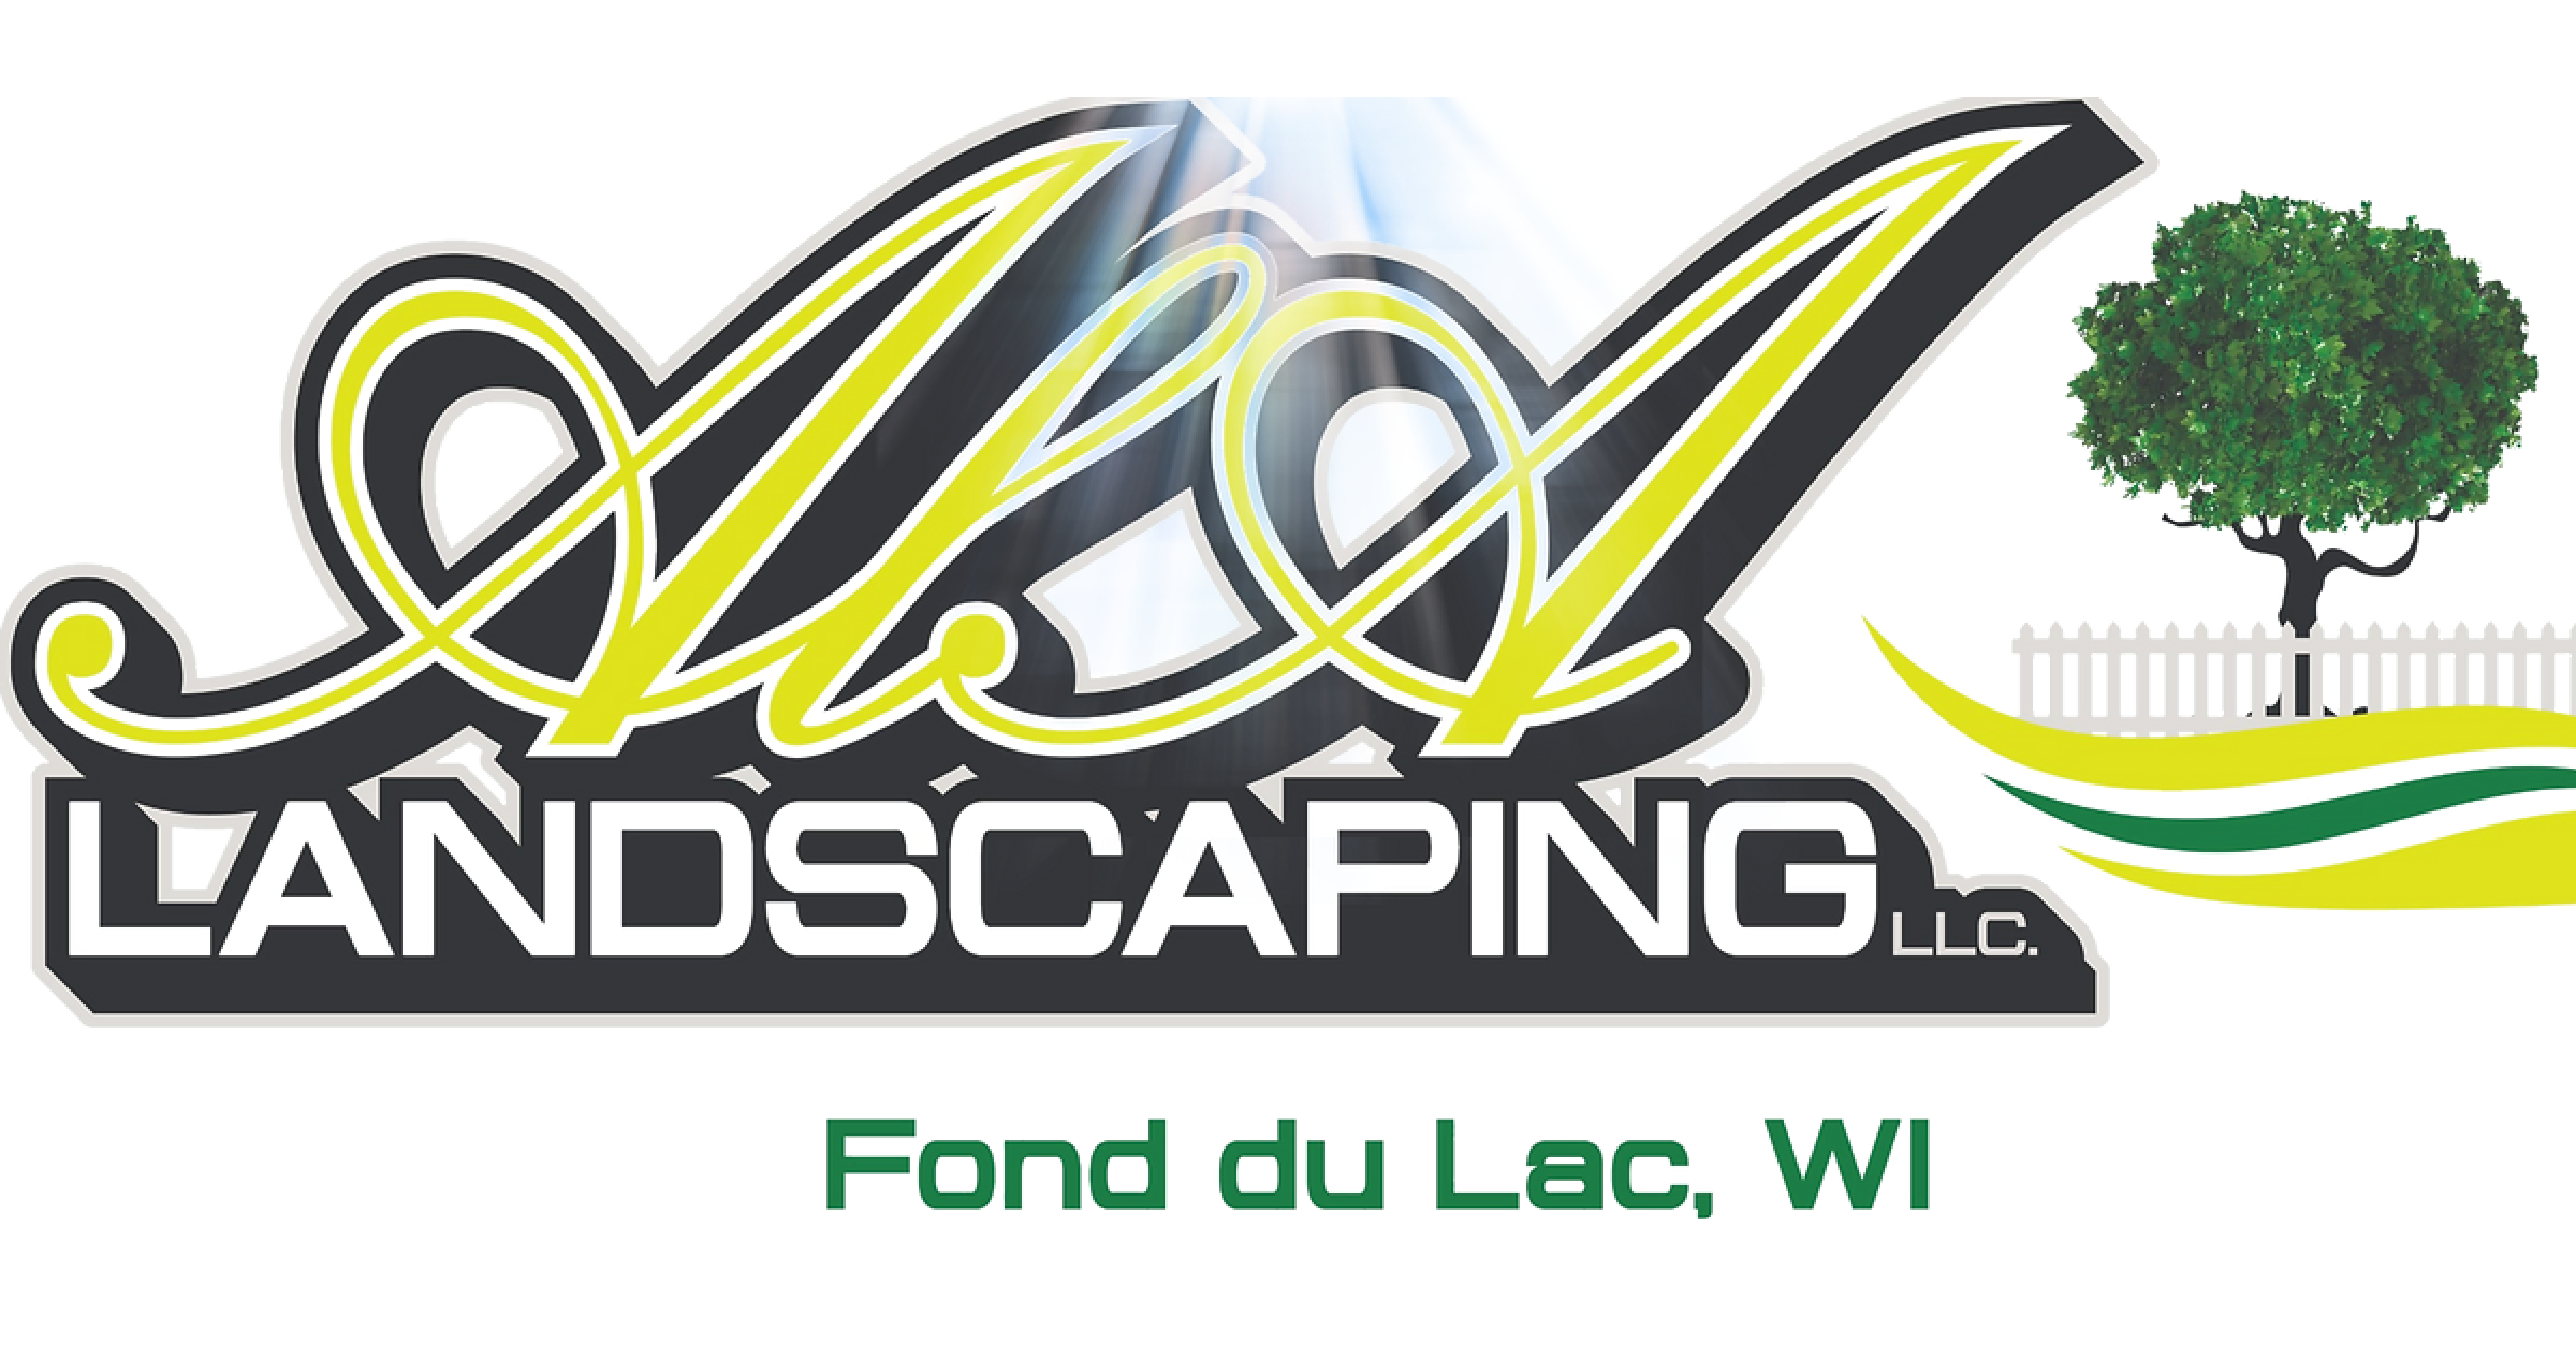 Ala Landscaping LLC